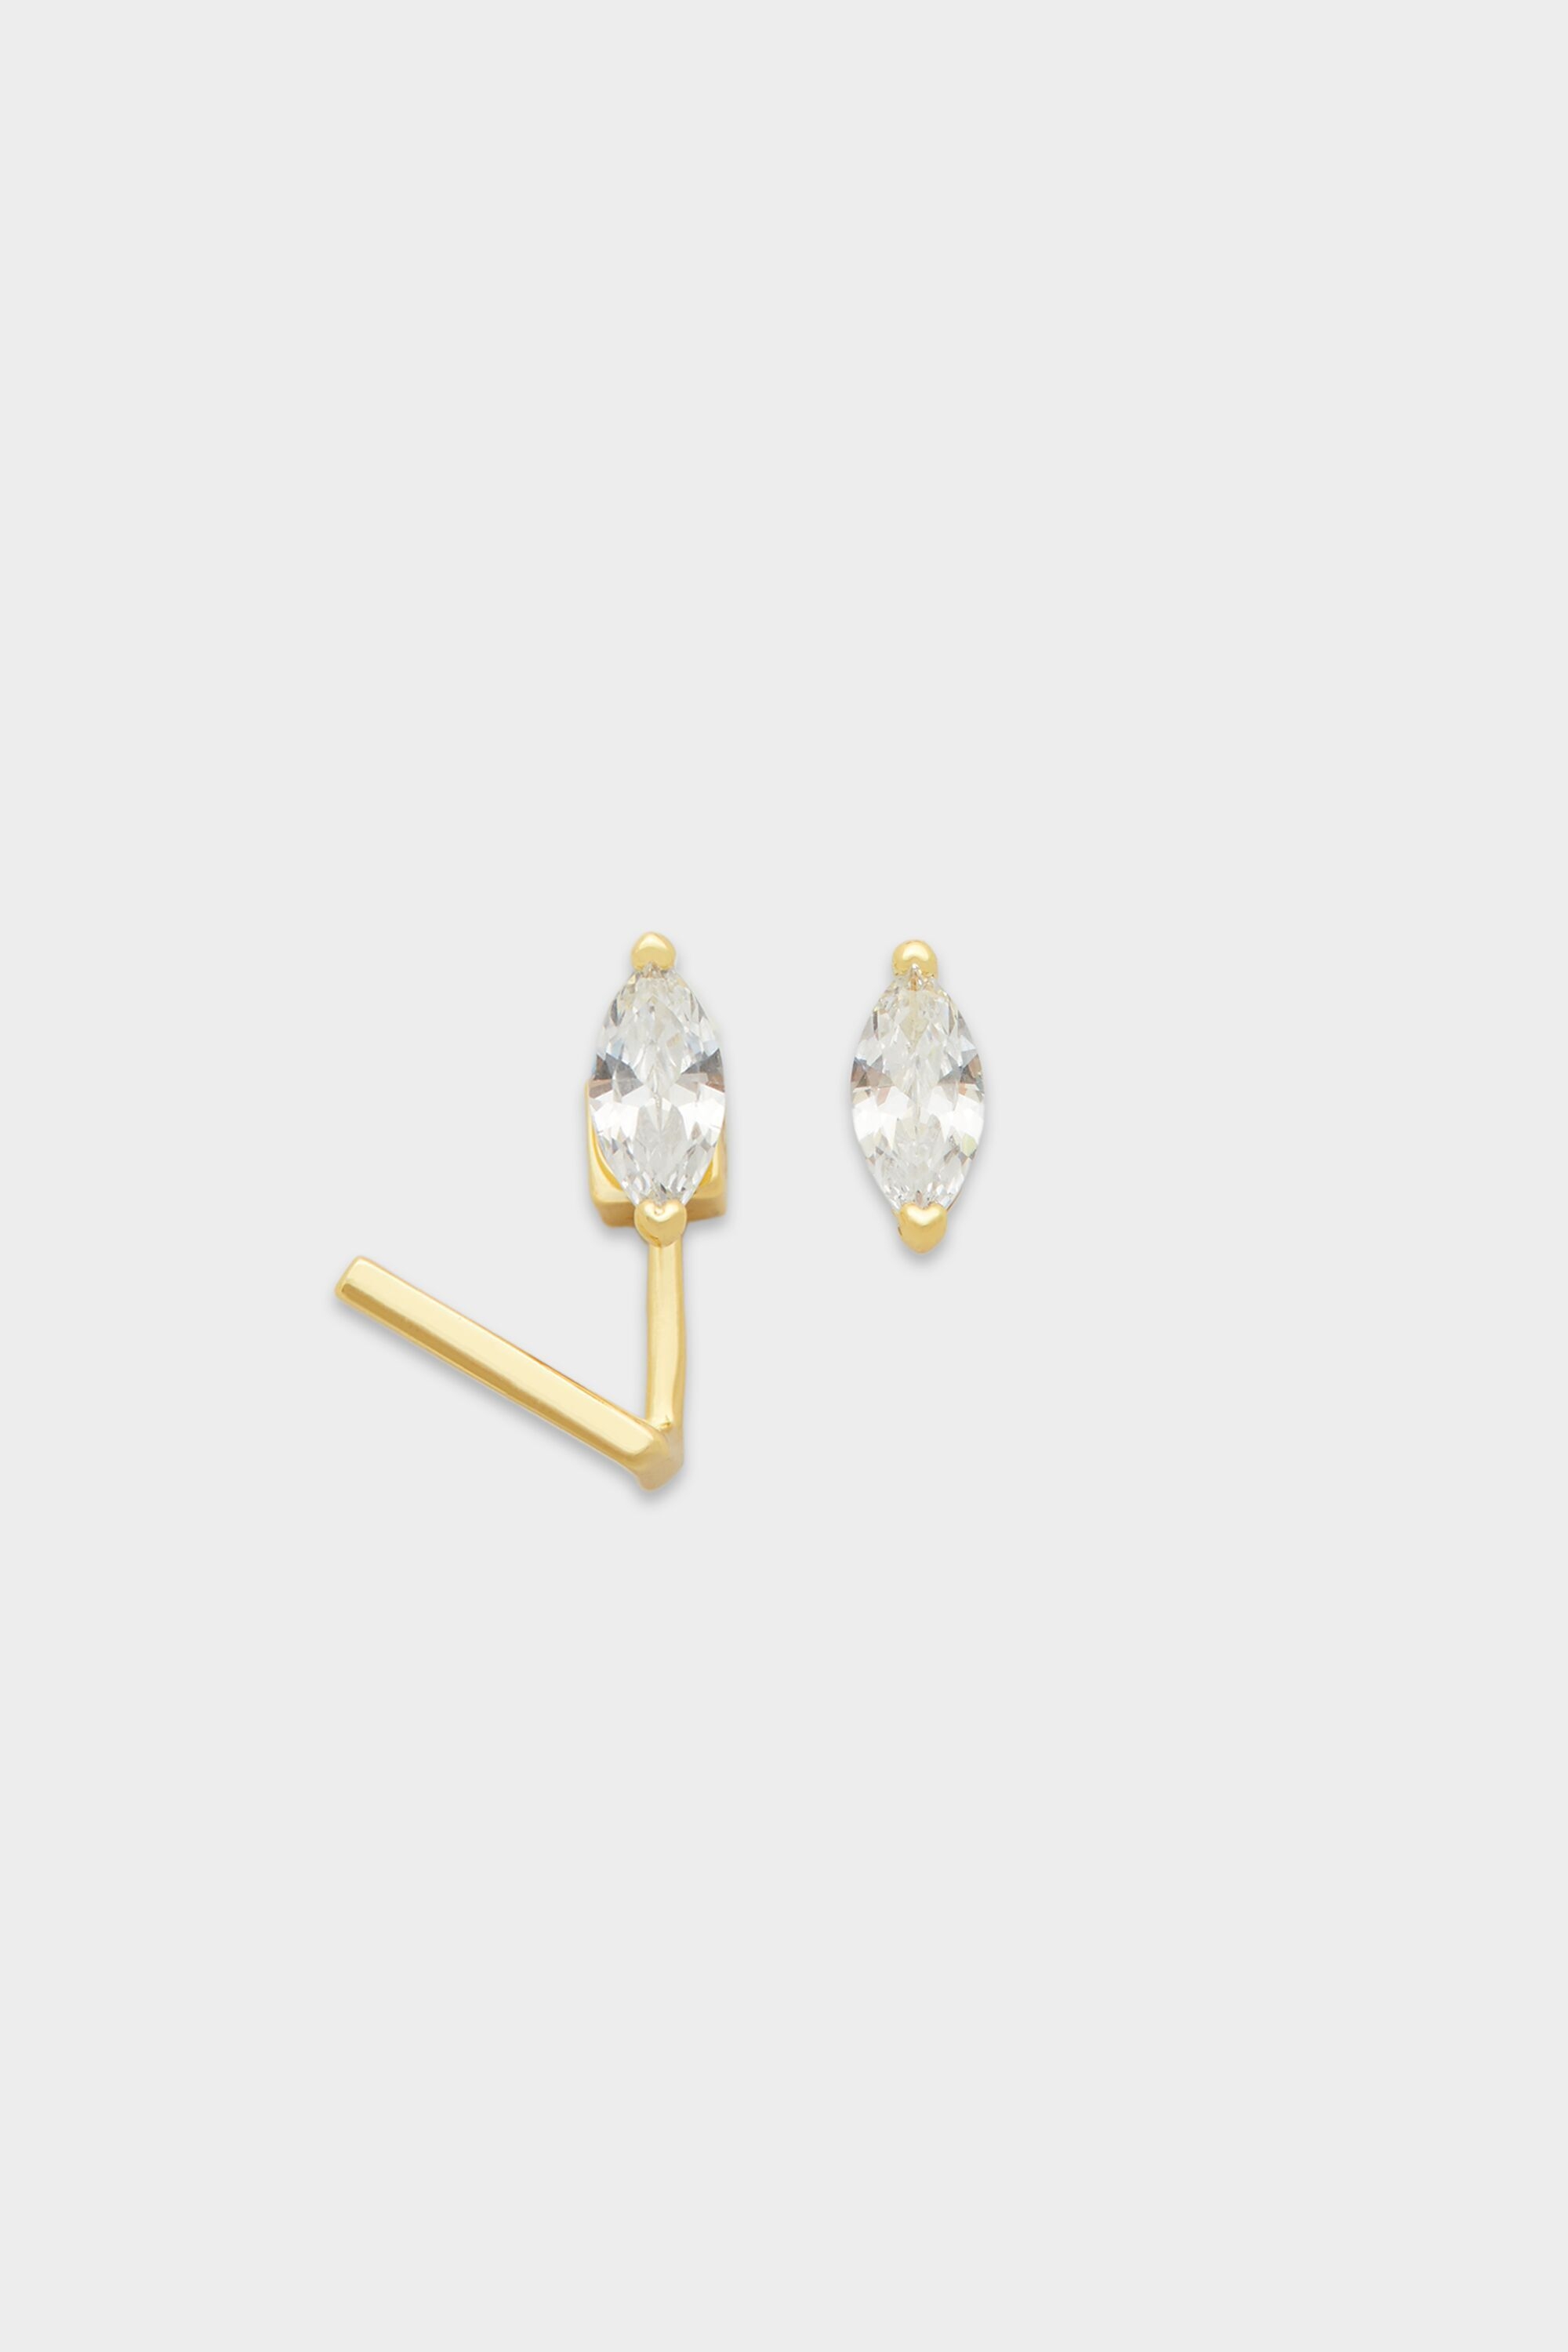 Radiant earrings